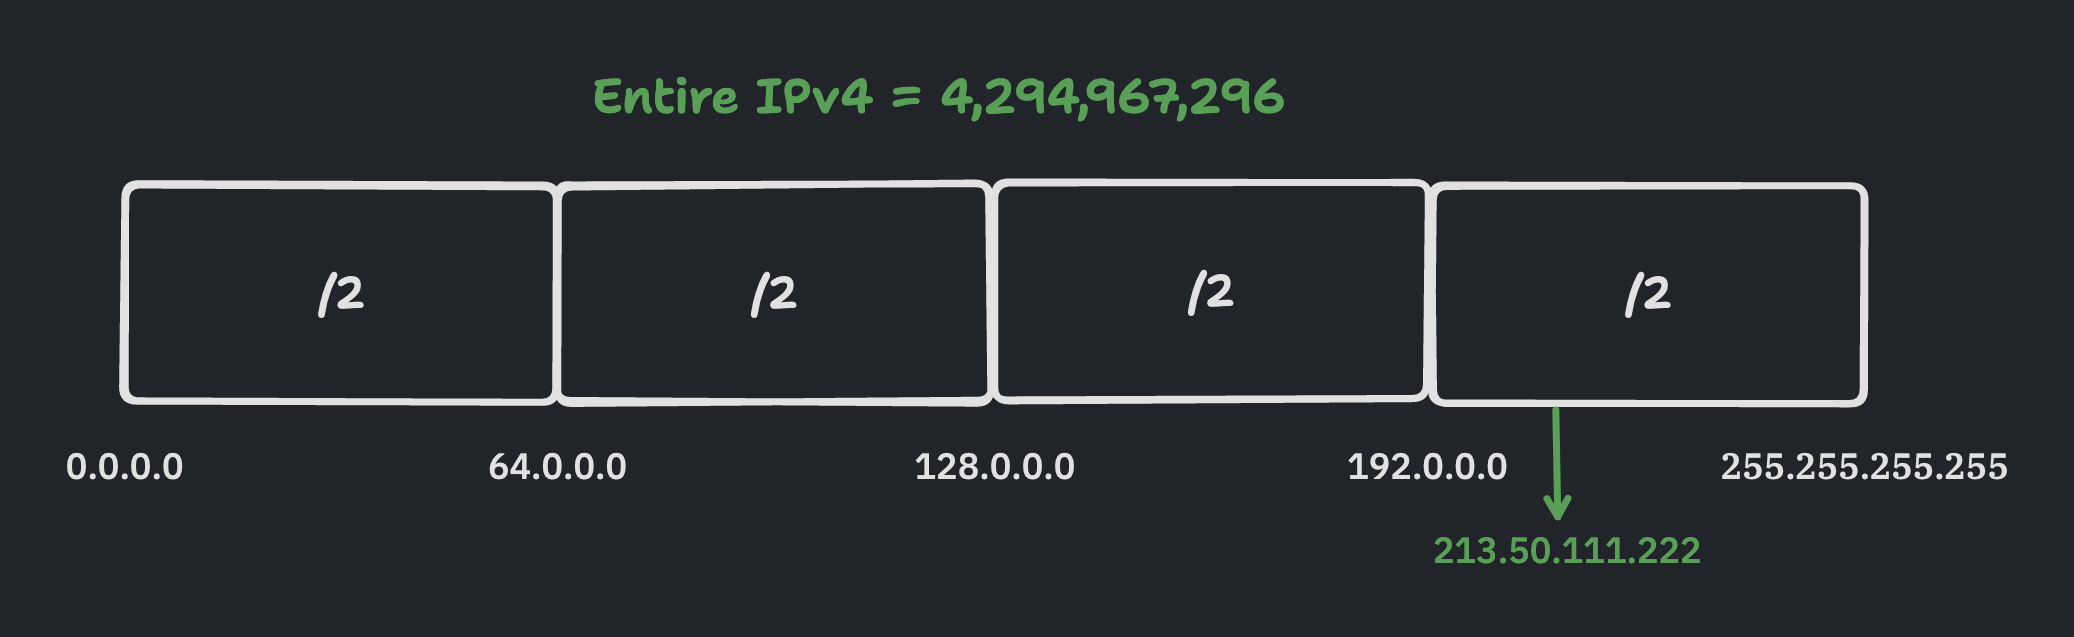 Entire IPv4 addresses